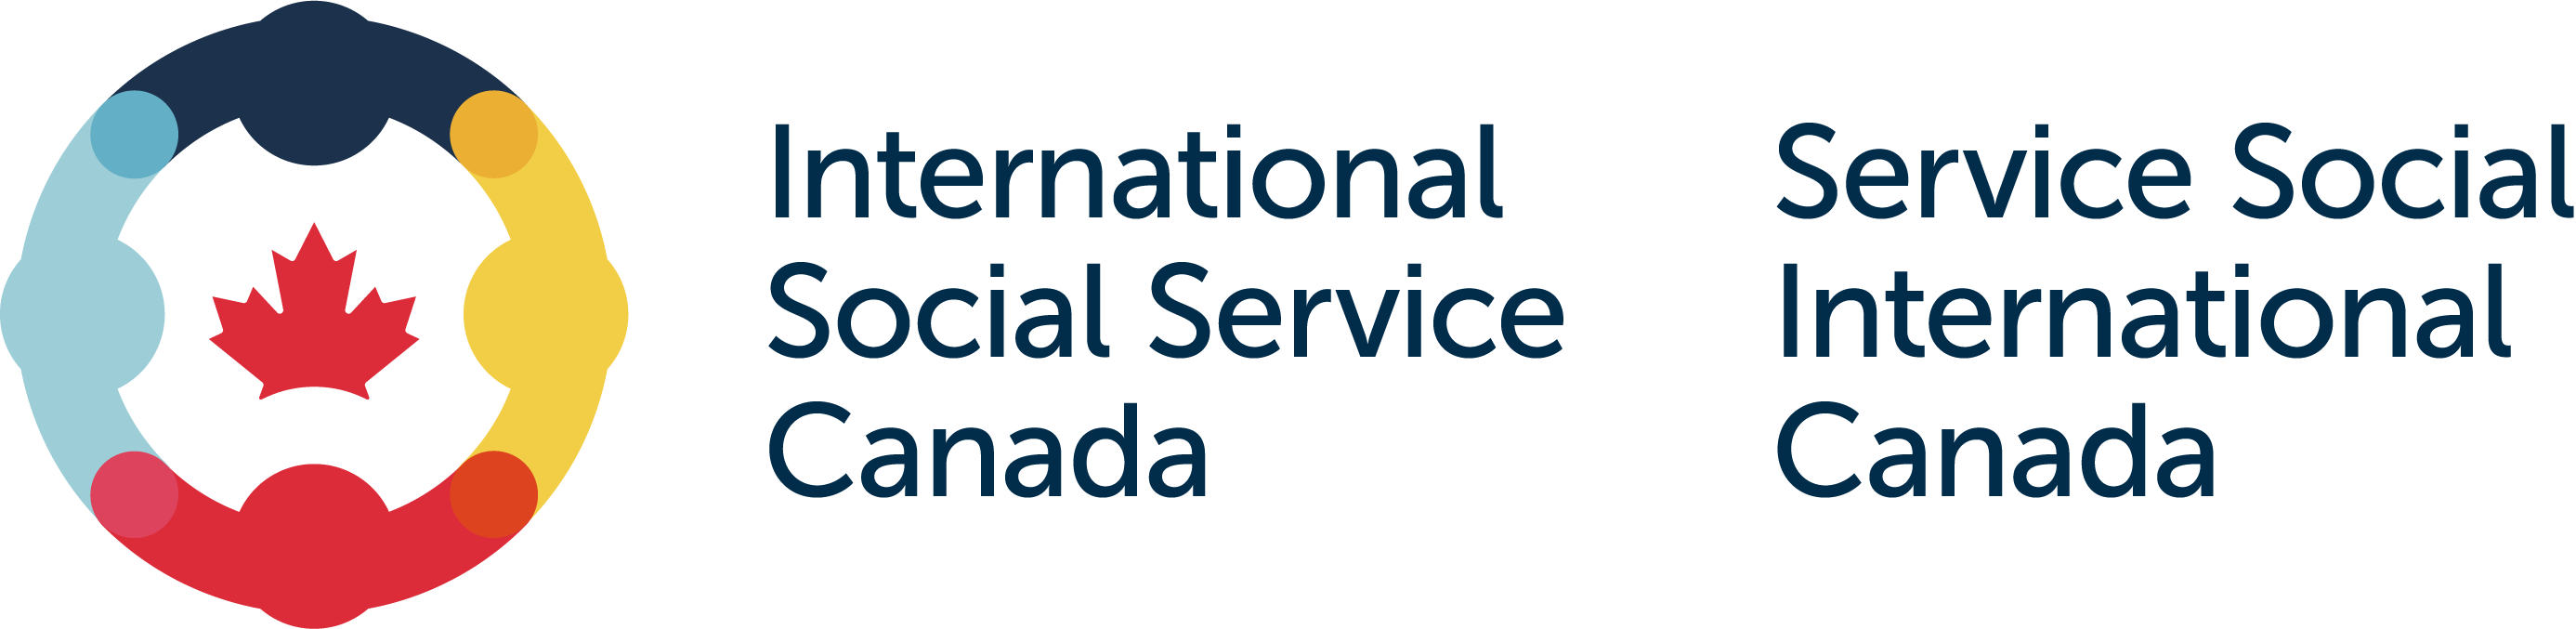 International Social Service Canada